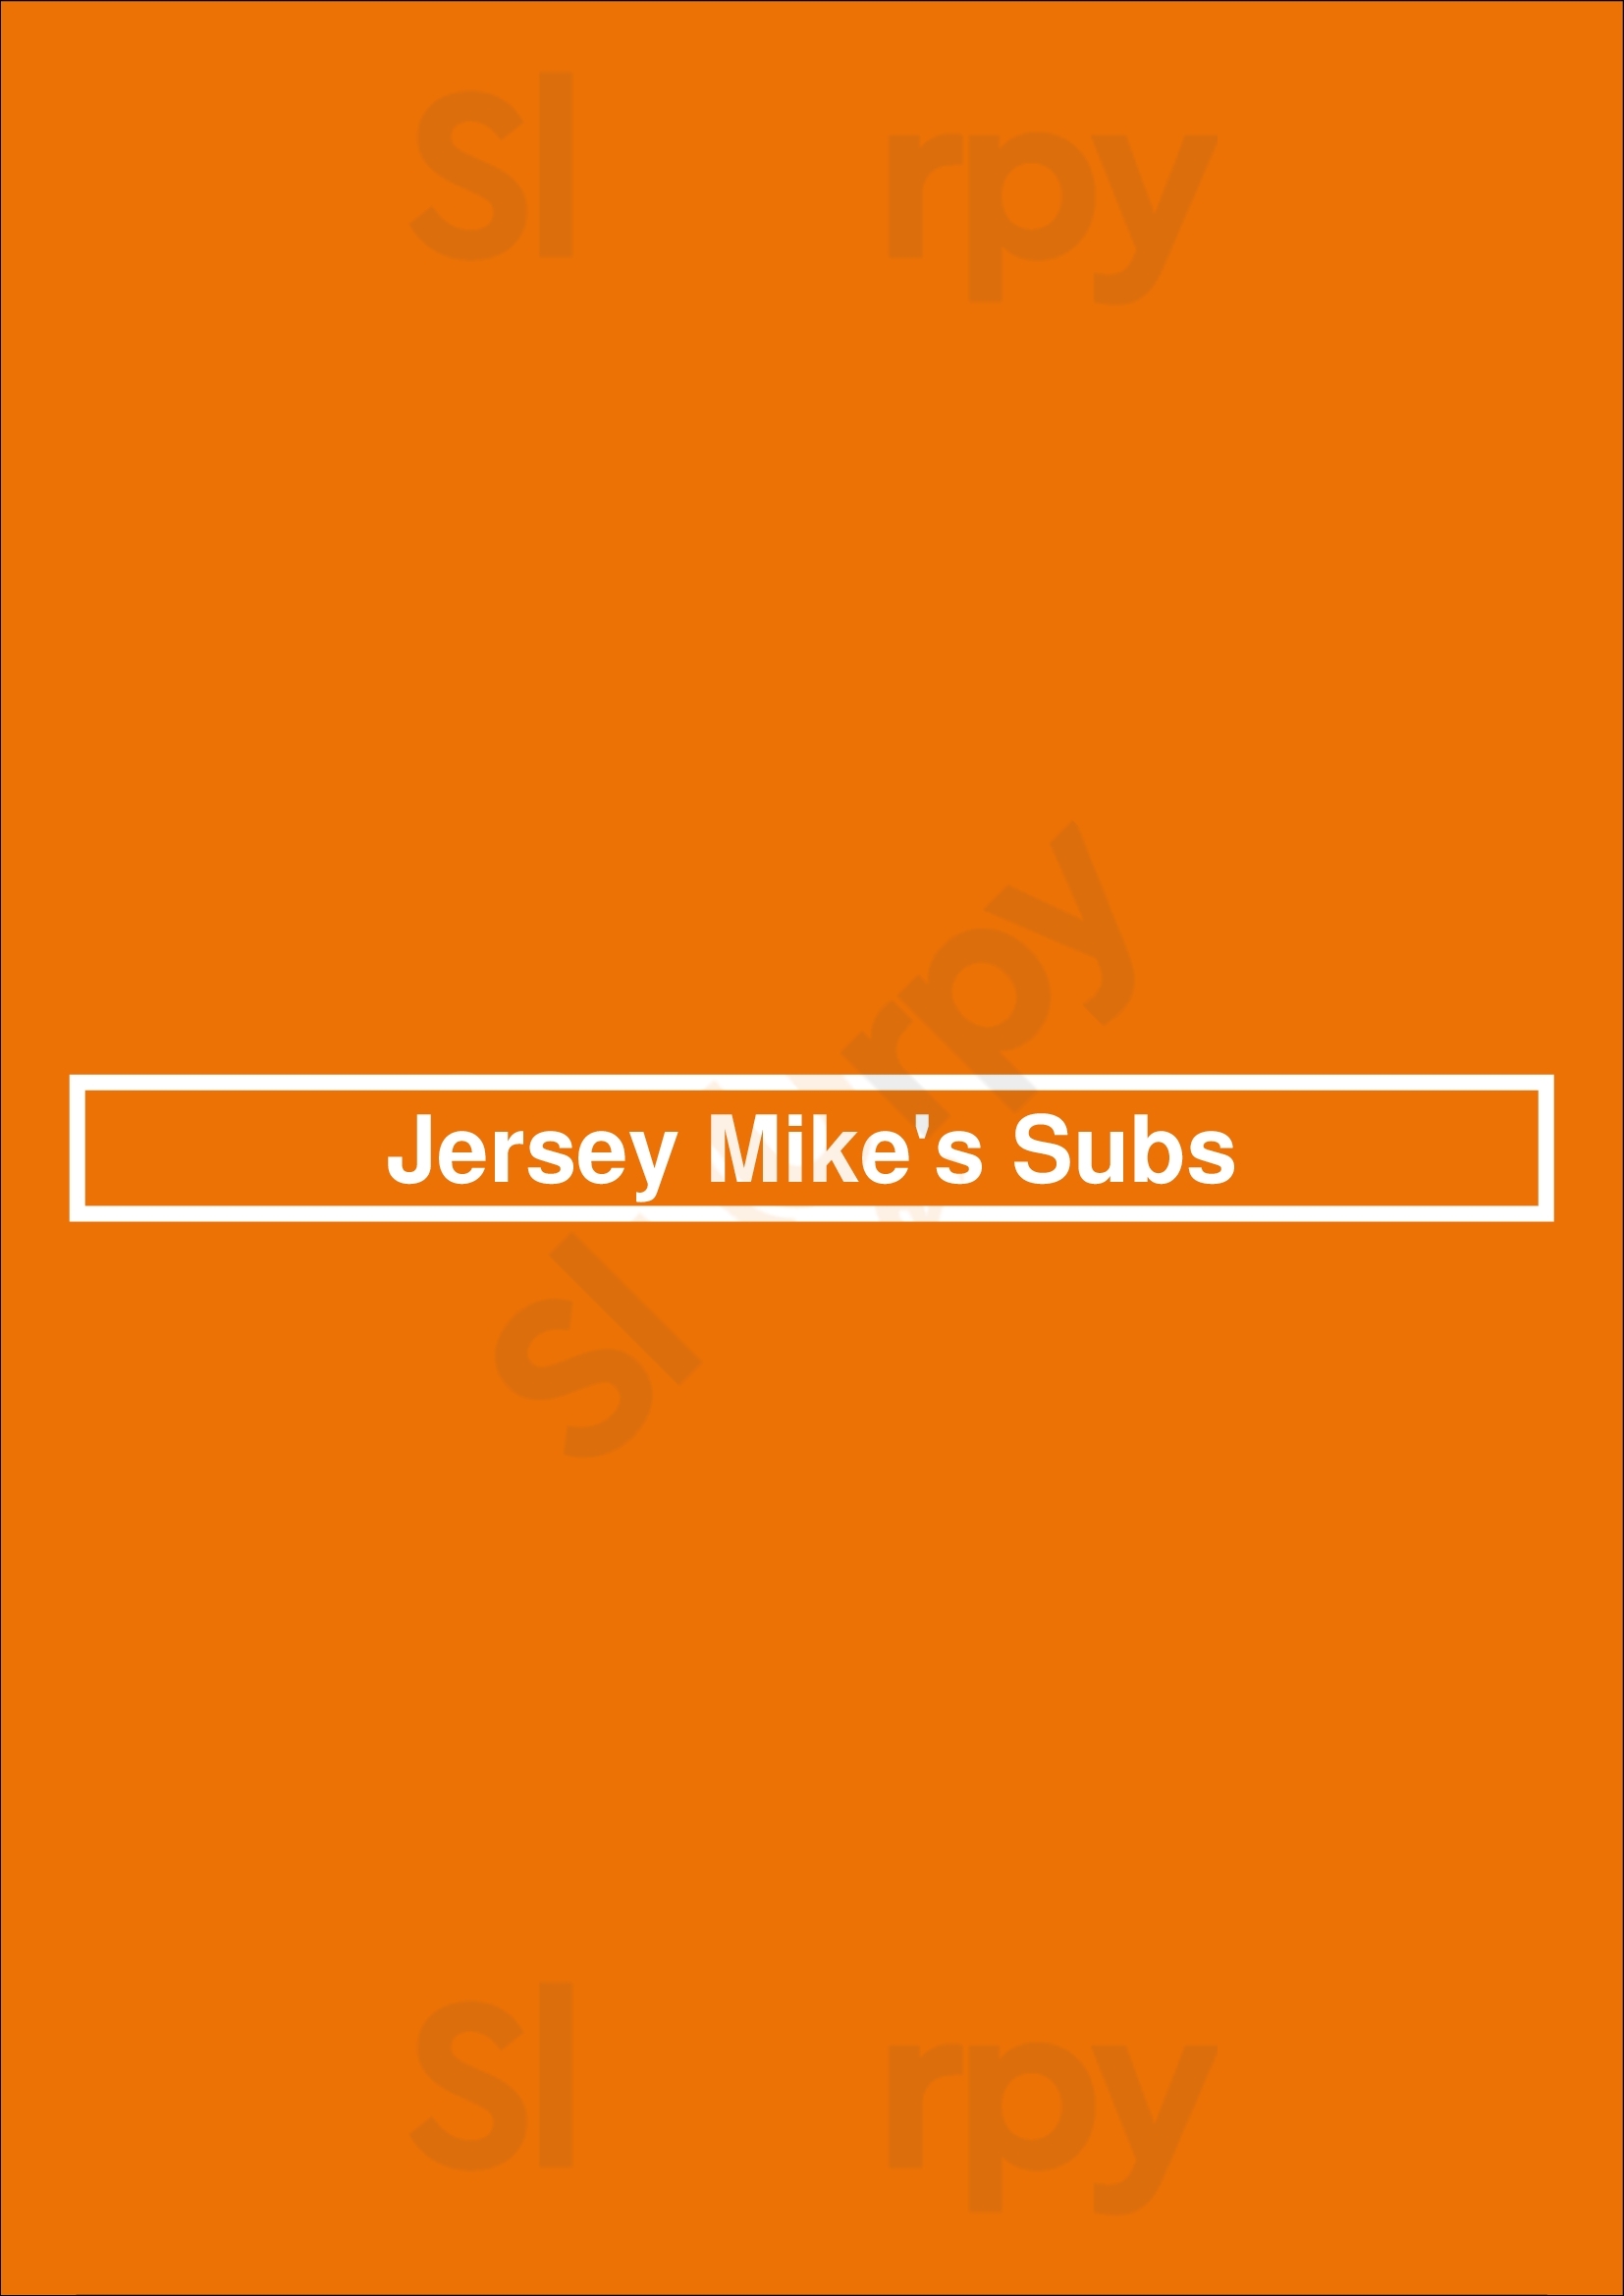 Jersey Mike's Subs Phoenix Menu - 1